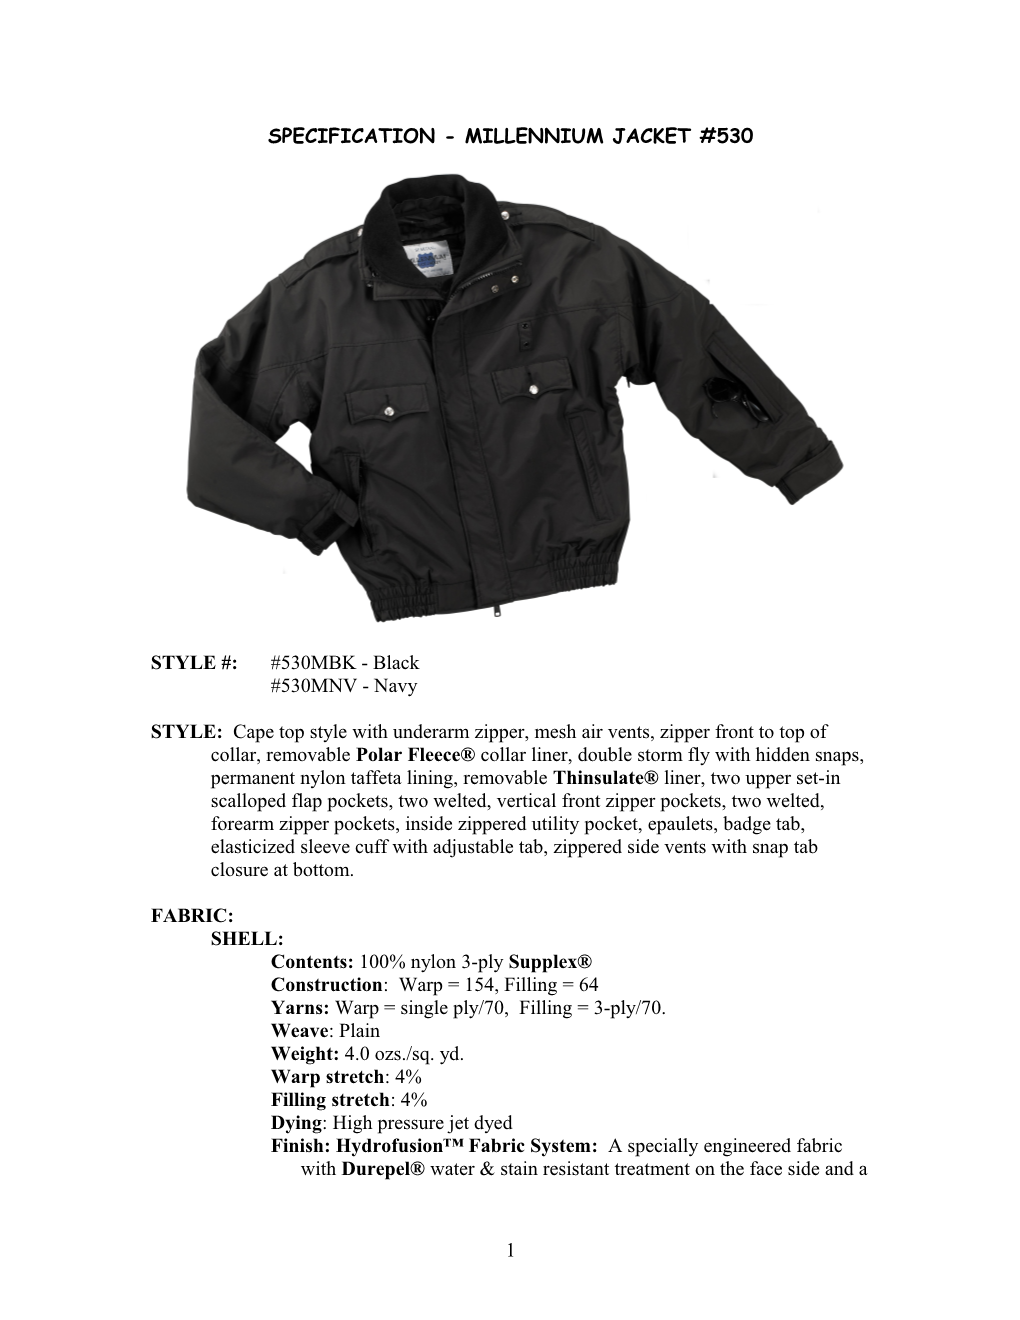 Specification - Millennium Police Jacket #530